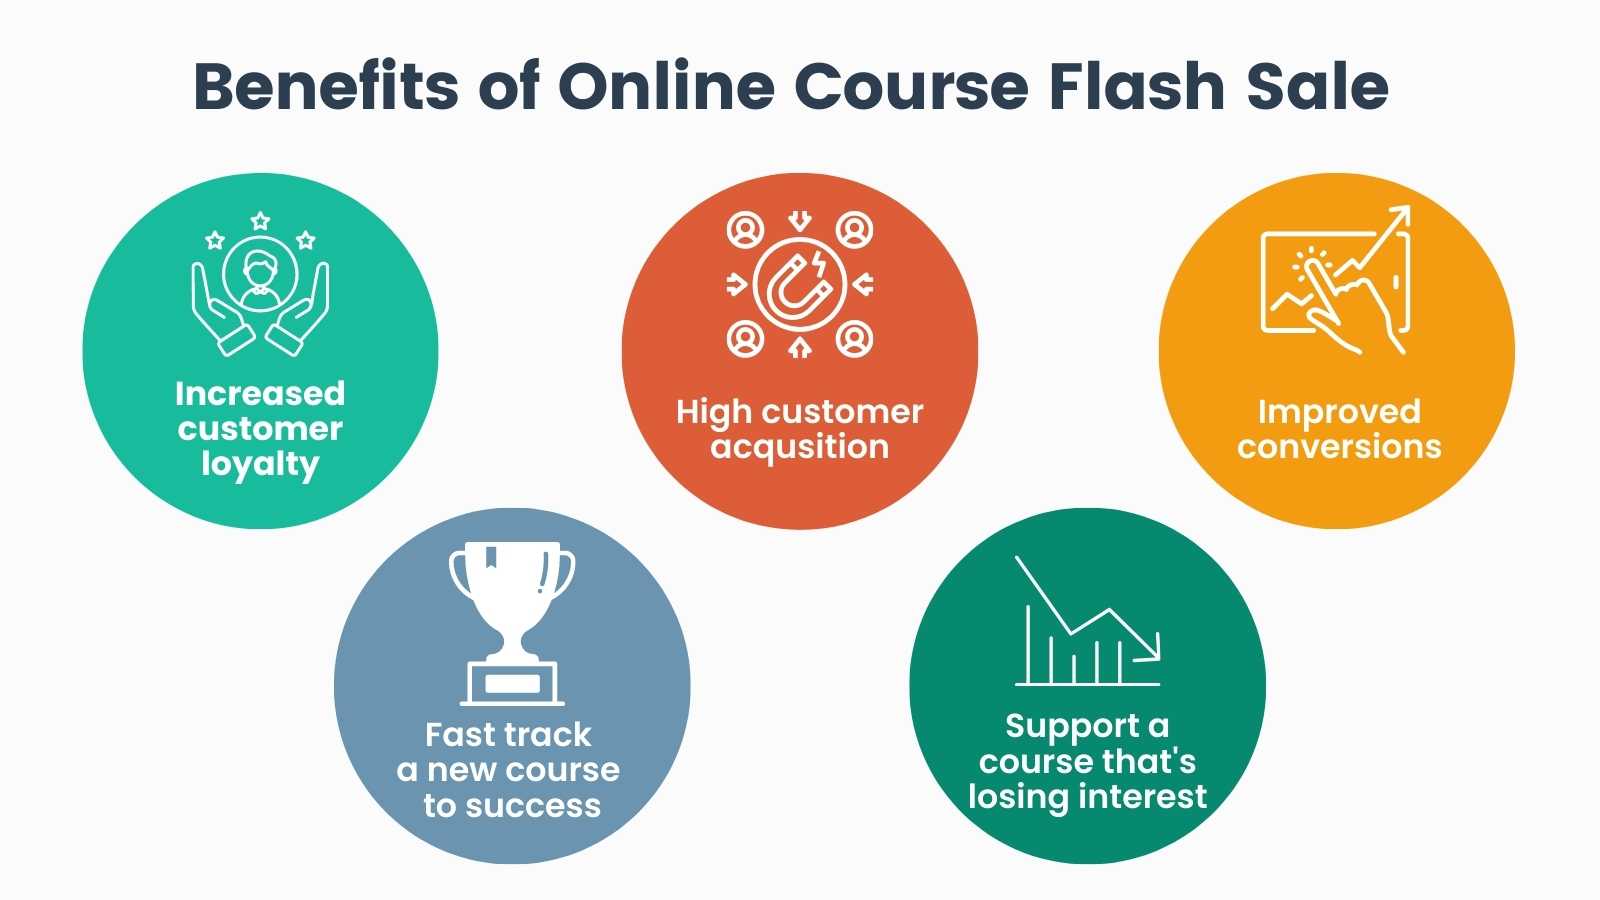 Benefits of Online Flash Sale Infographic